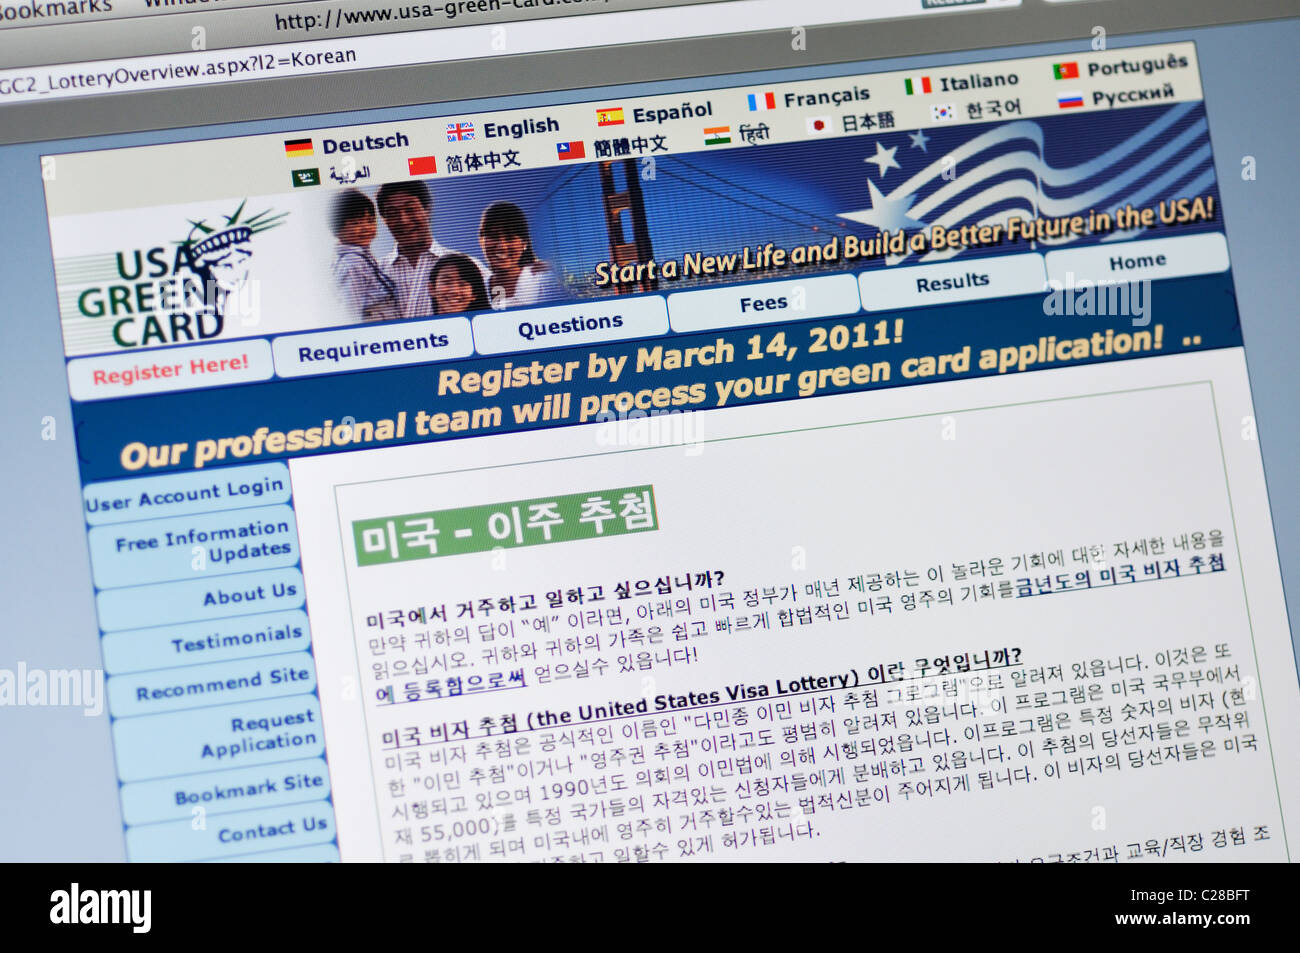 USA Green Card Lottery website - in Korean Stock Photo